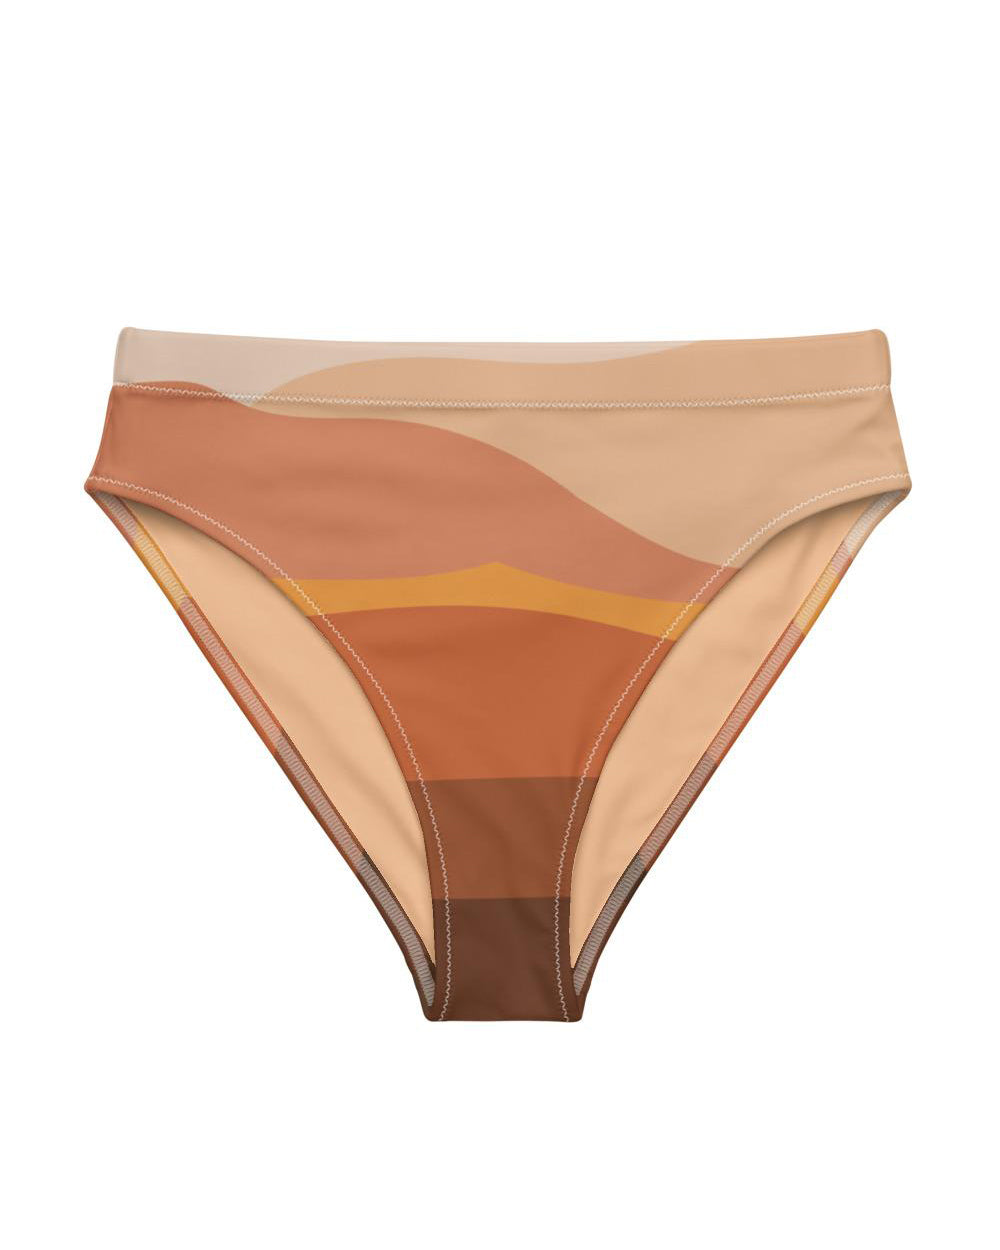 Horizon High-Waisted Bikini Bottom - The Cool Ppl